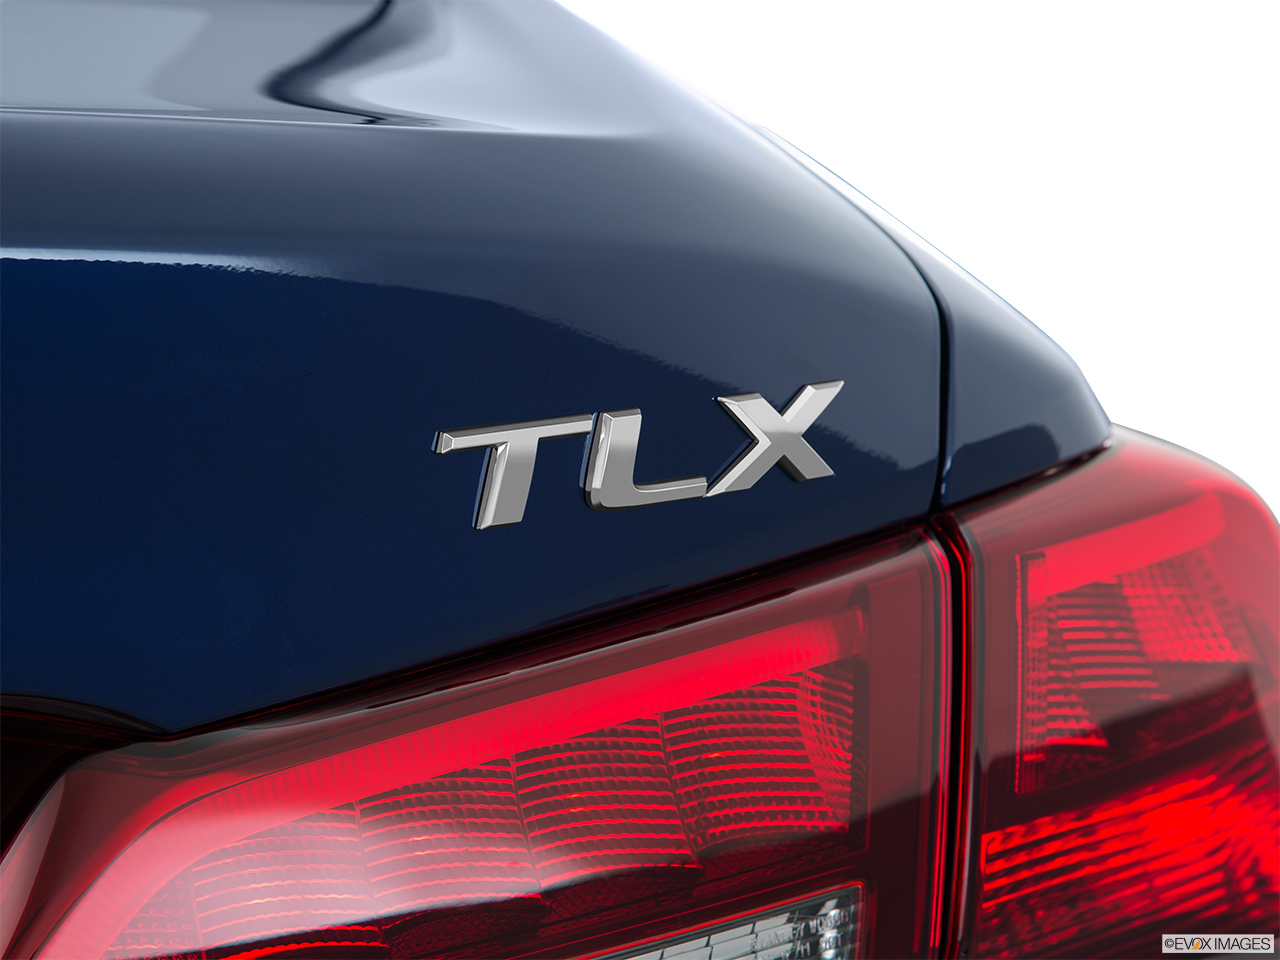 2015 Acura TLX 3.5 V-6 9-AT P-AWS Rear model badge/emblem 